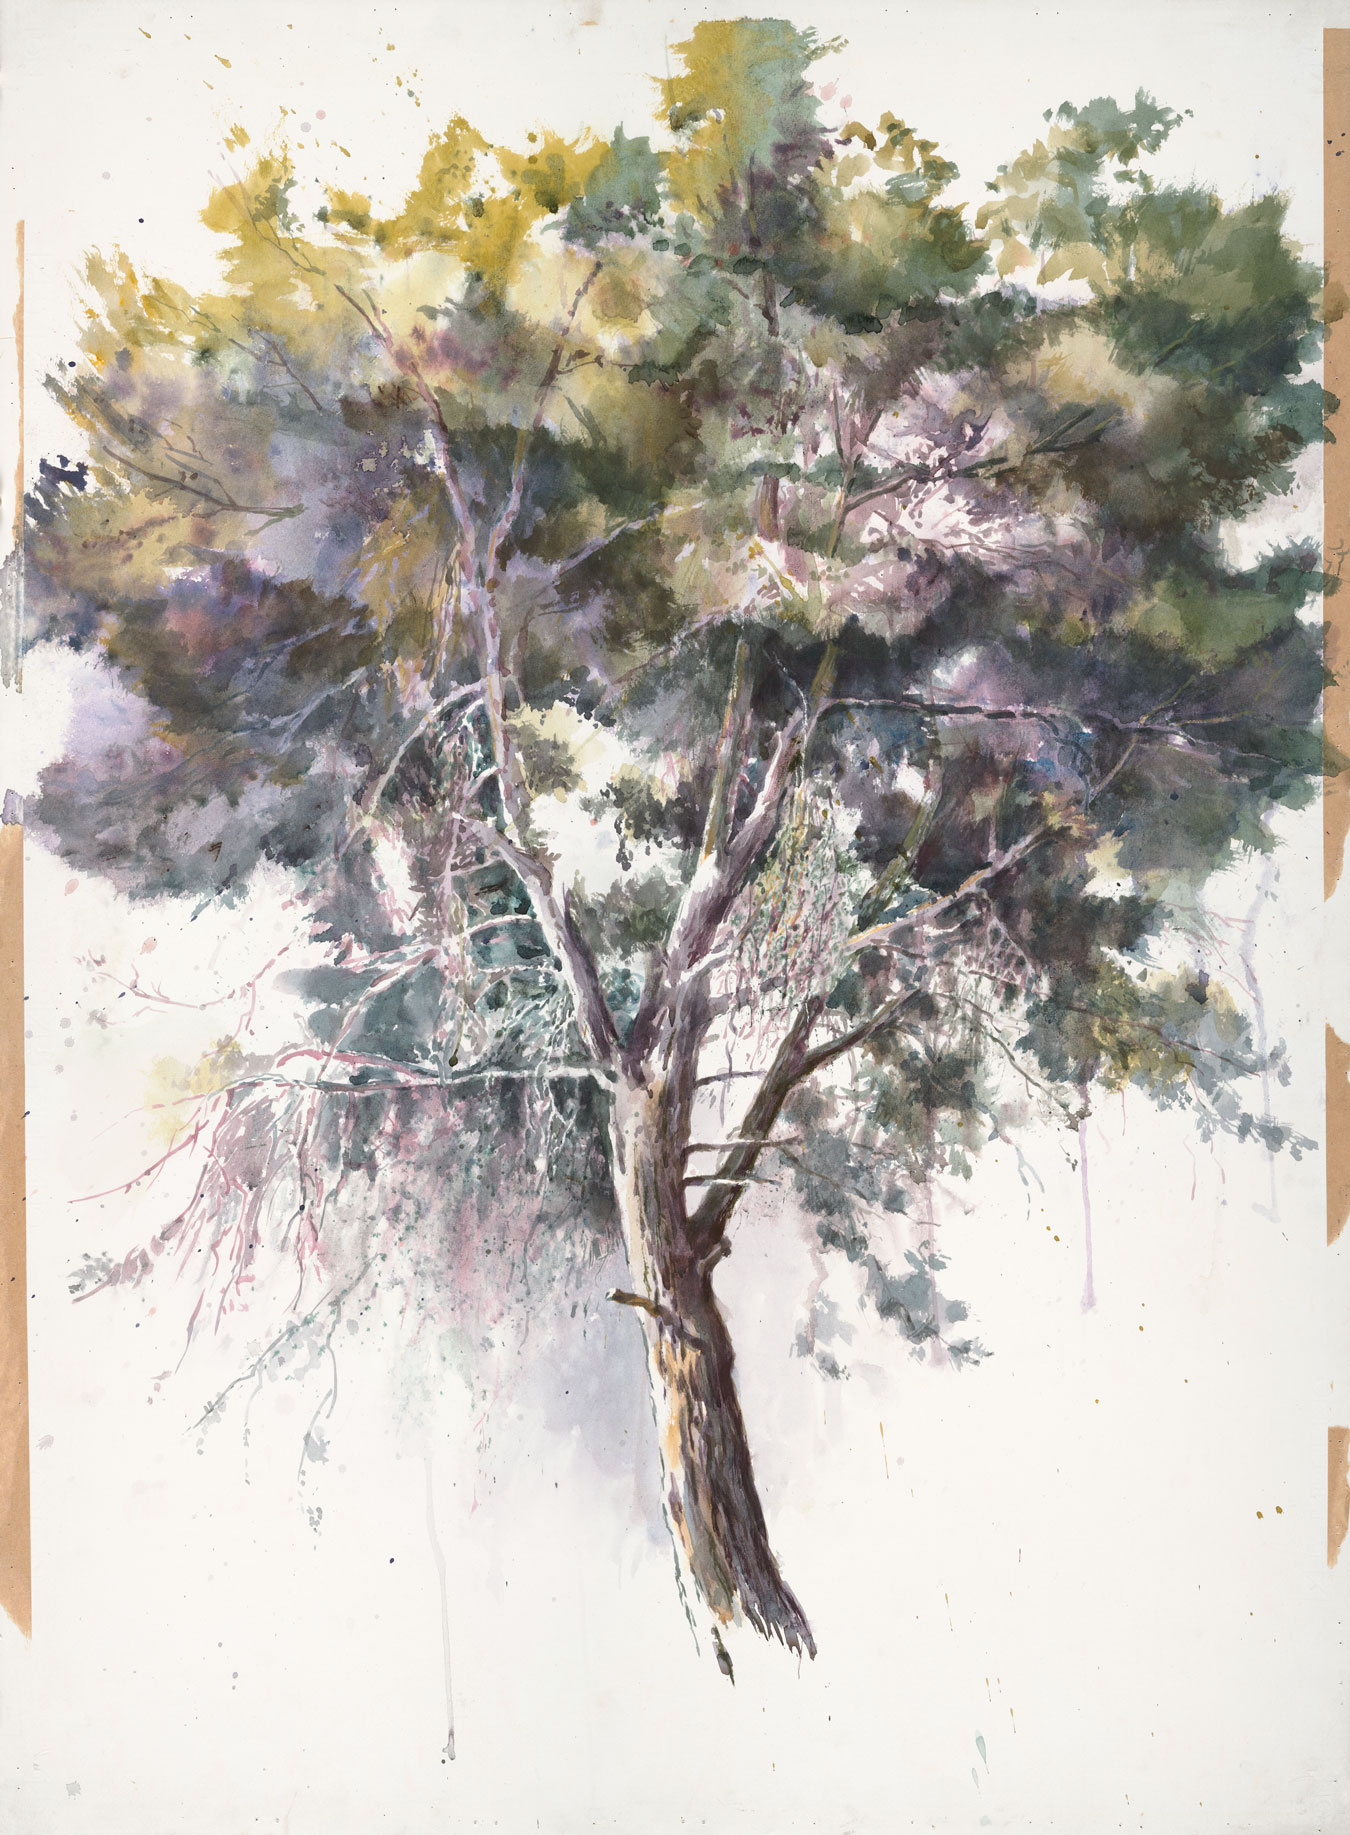 Marek Yanai - Portrait of a Pine Tree #1